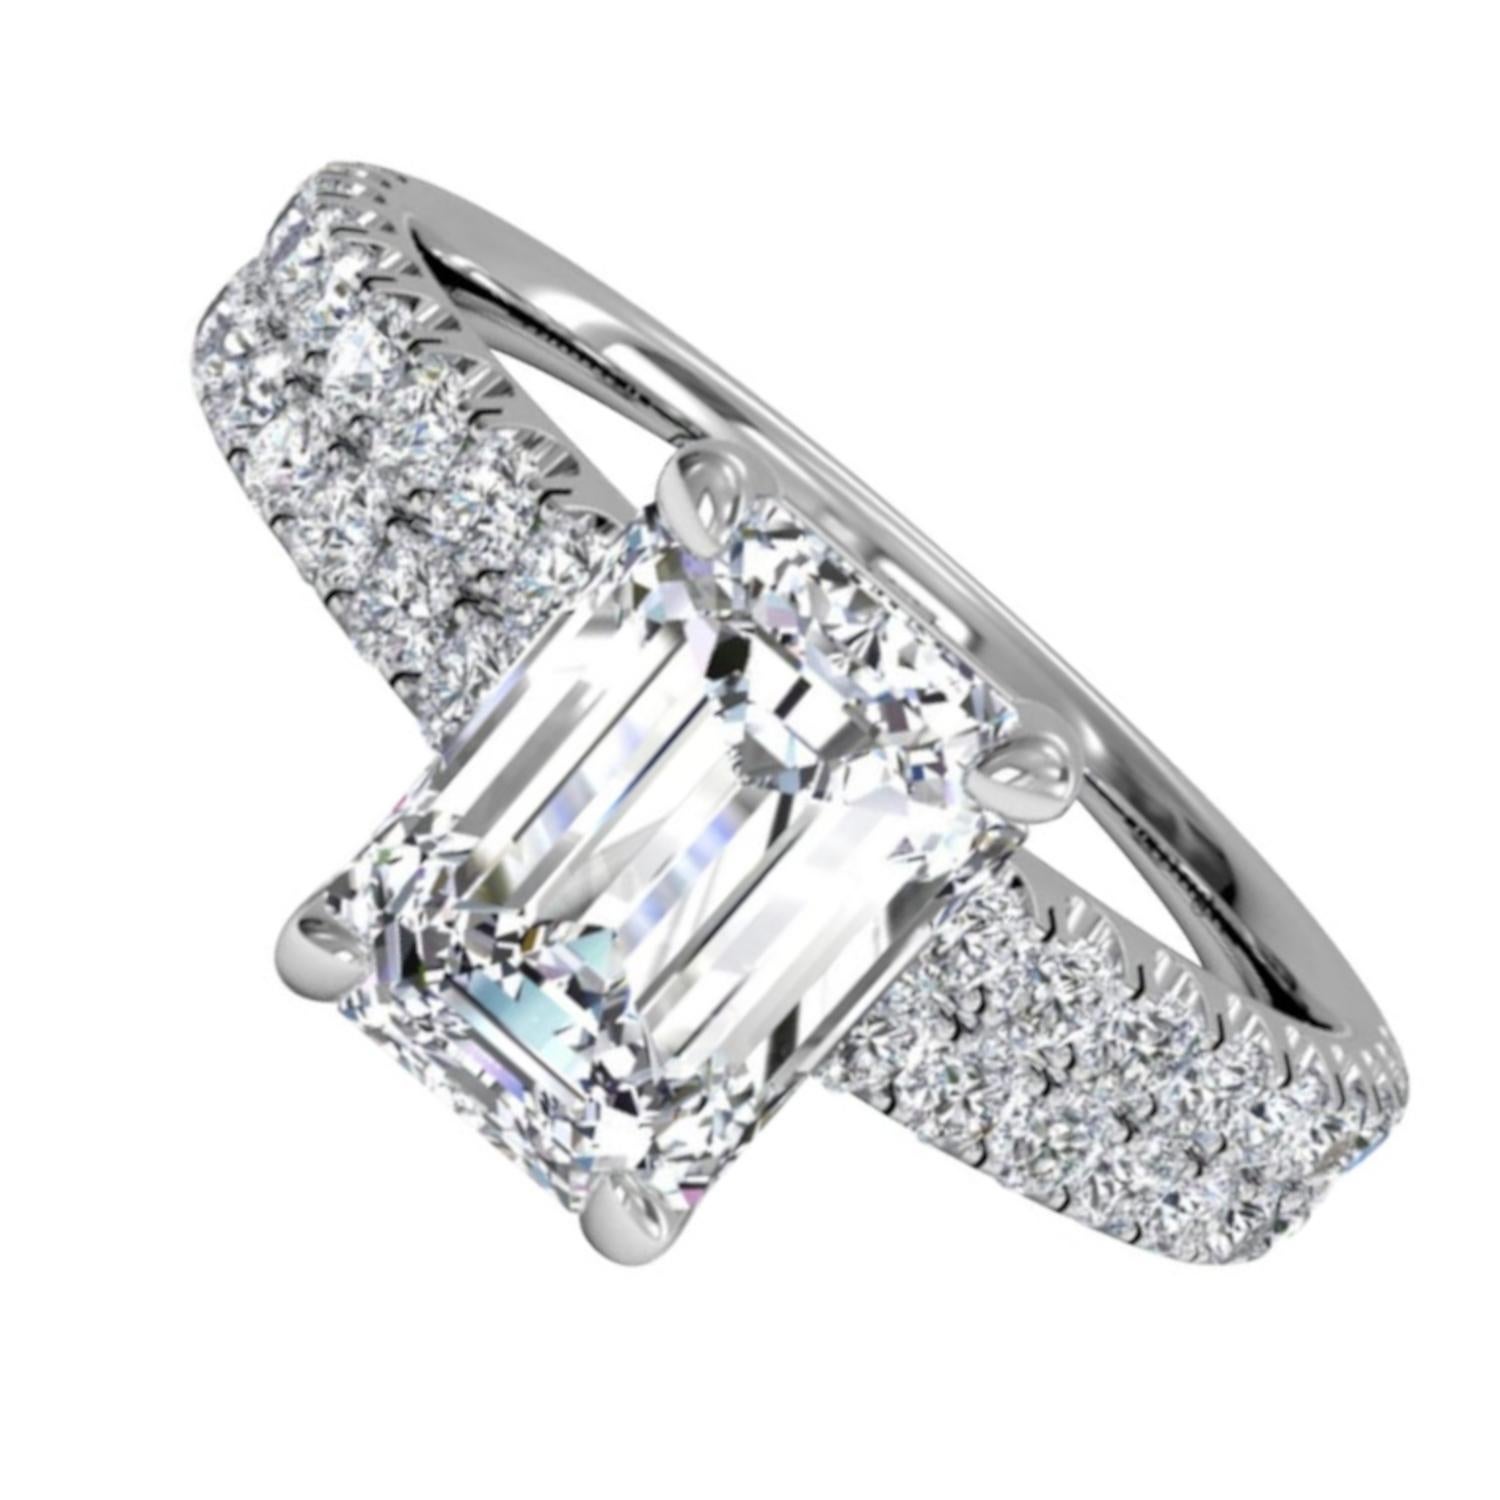 10 carat emerald diamond ring